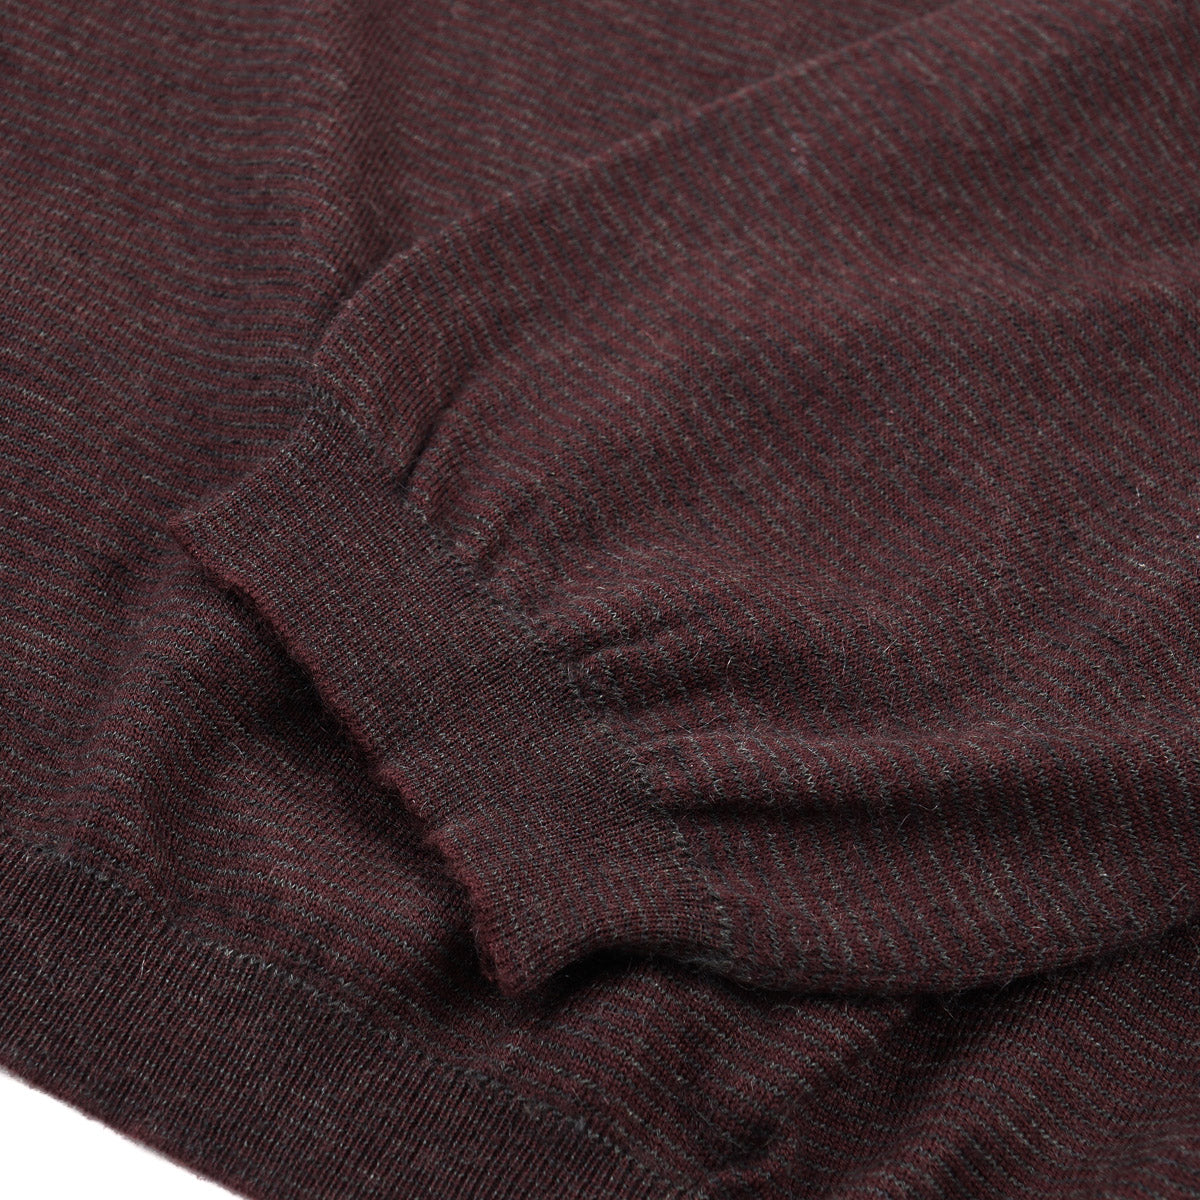 Kiton Lightweight Superfine Cashmere Sweater - Top Shelf Apparel